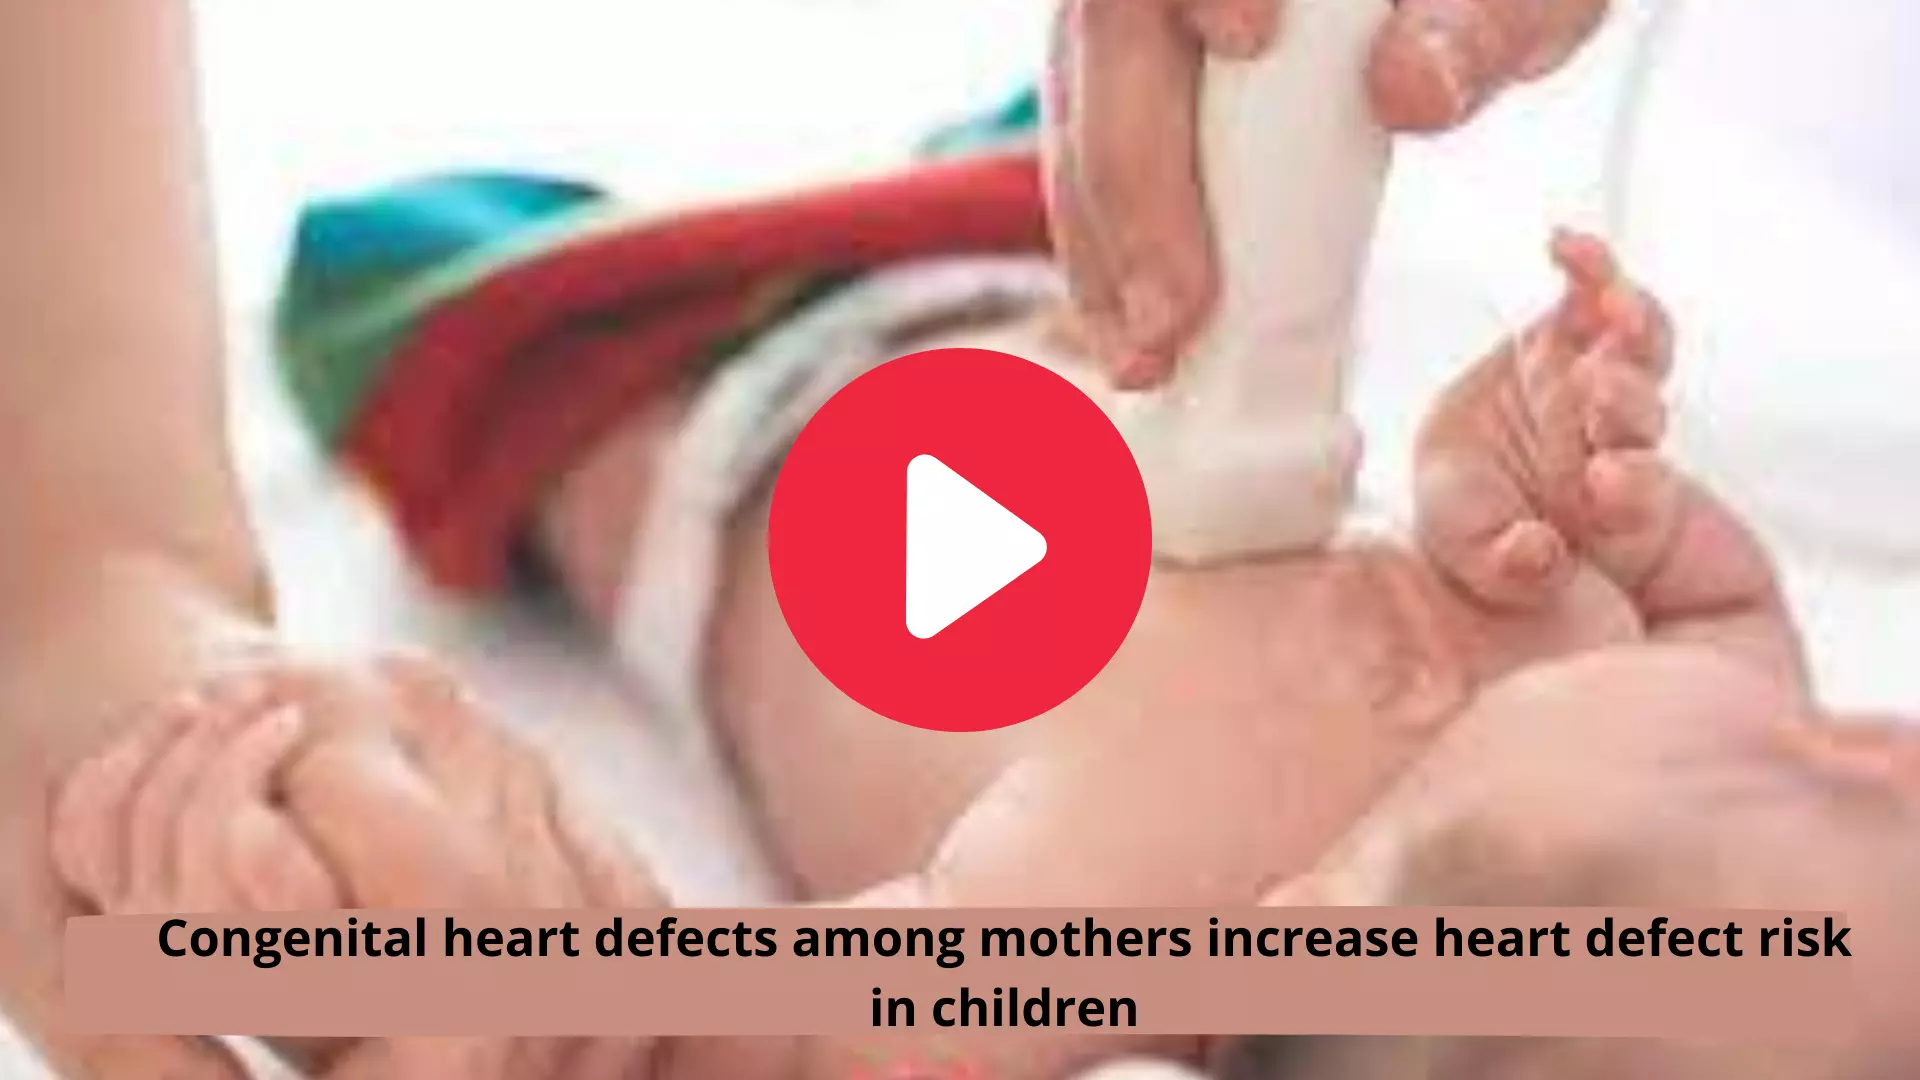 Congenital heart defects among mothers increase heart defect risk in children